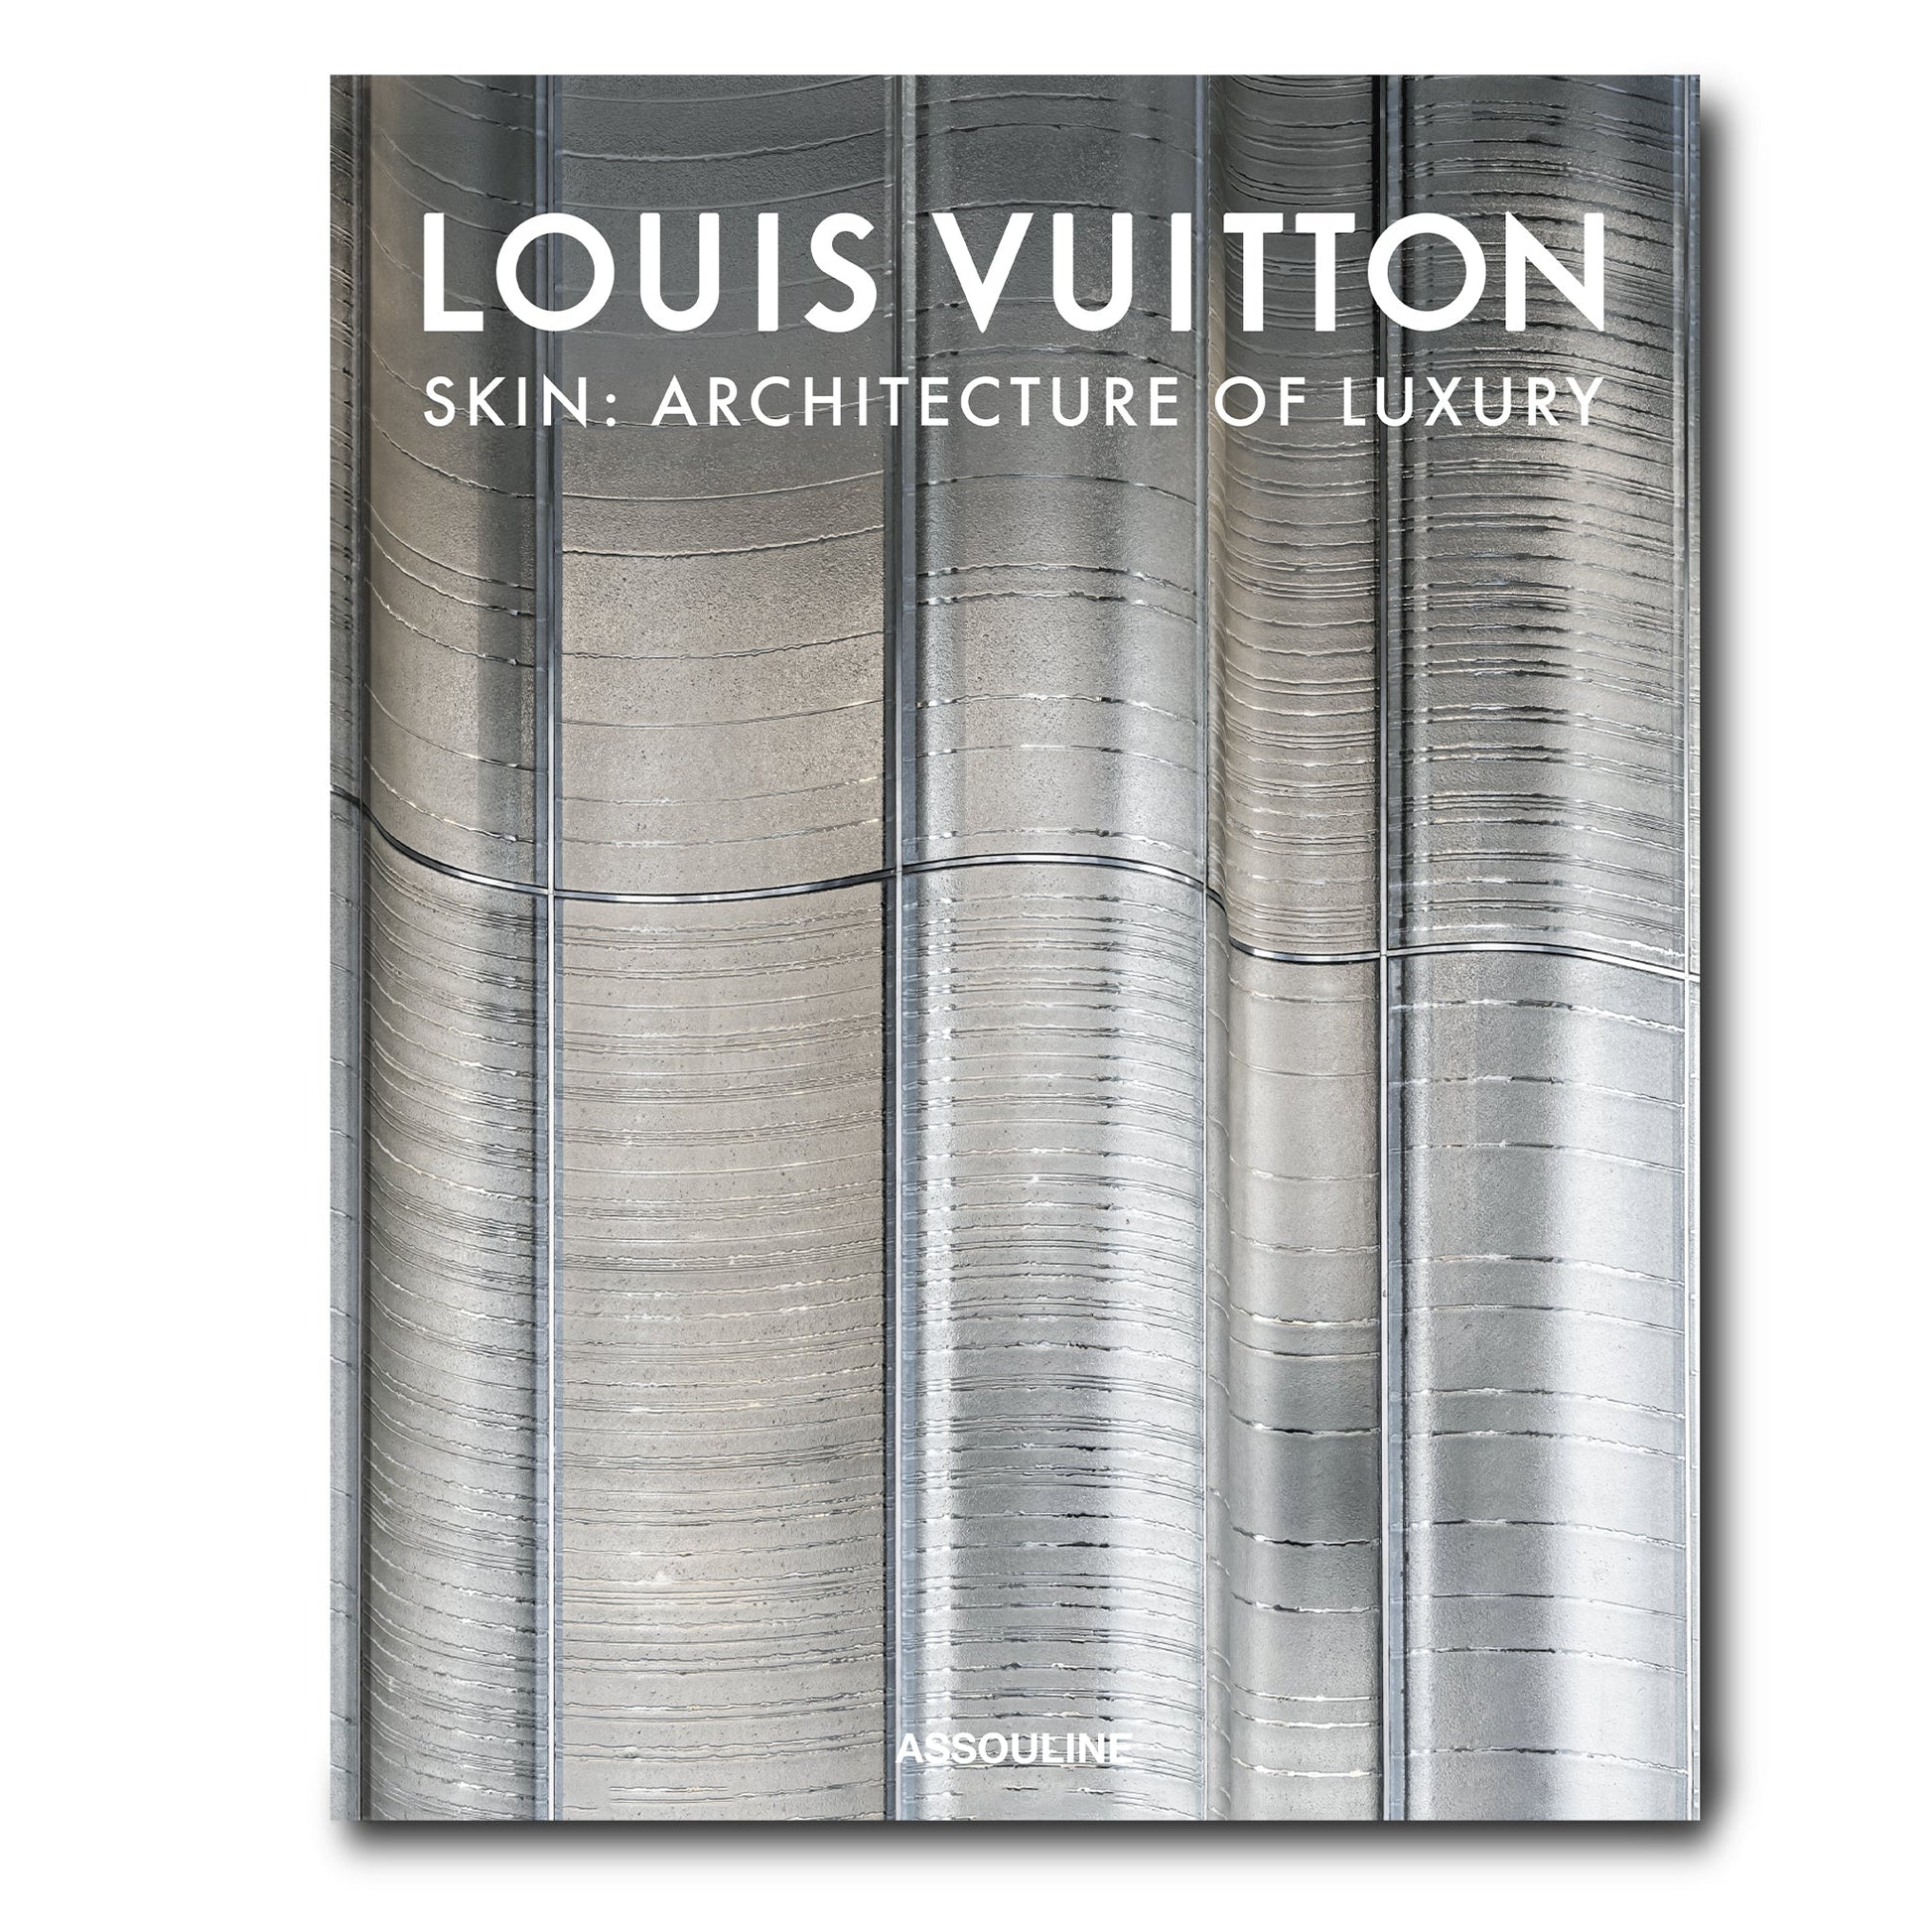 Louis Vuitton Skin (New York Cover): by Goldberger, Paul